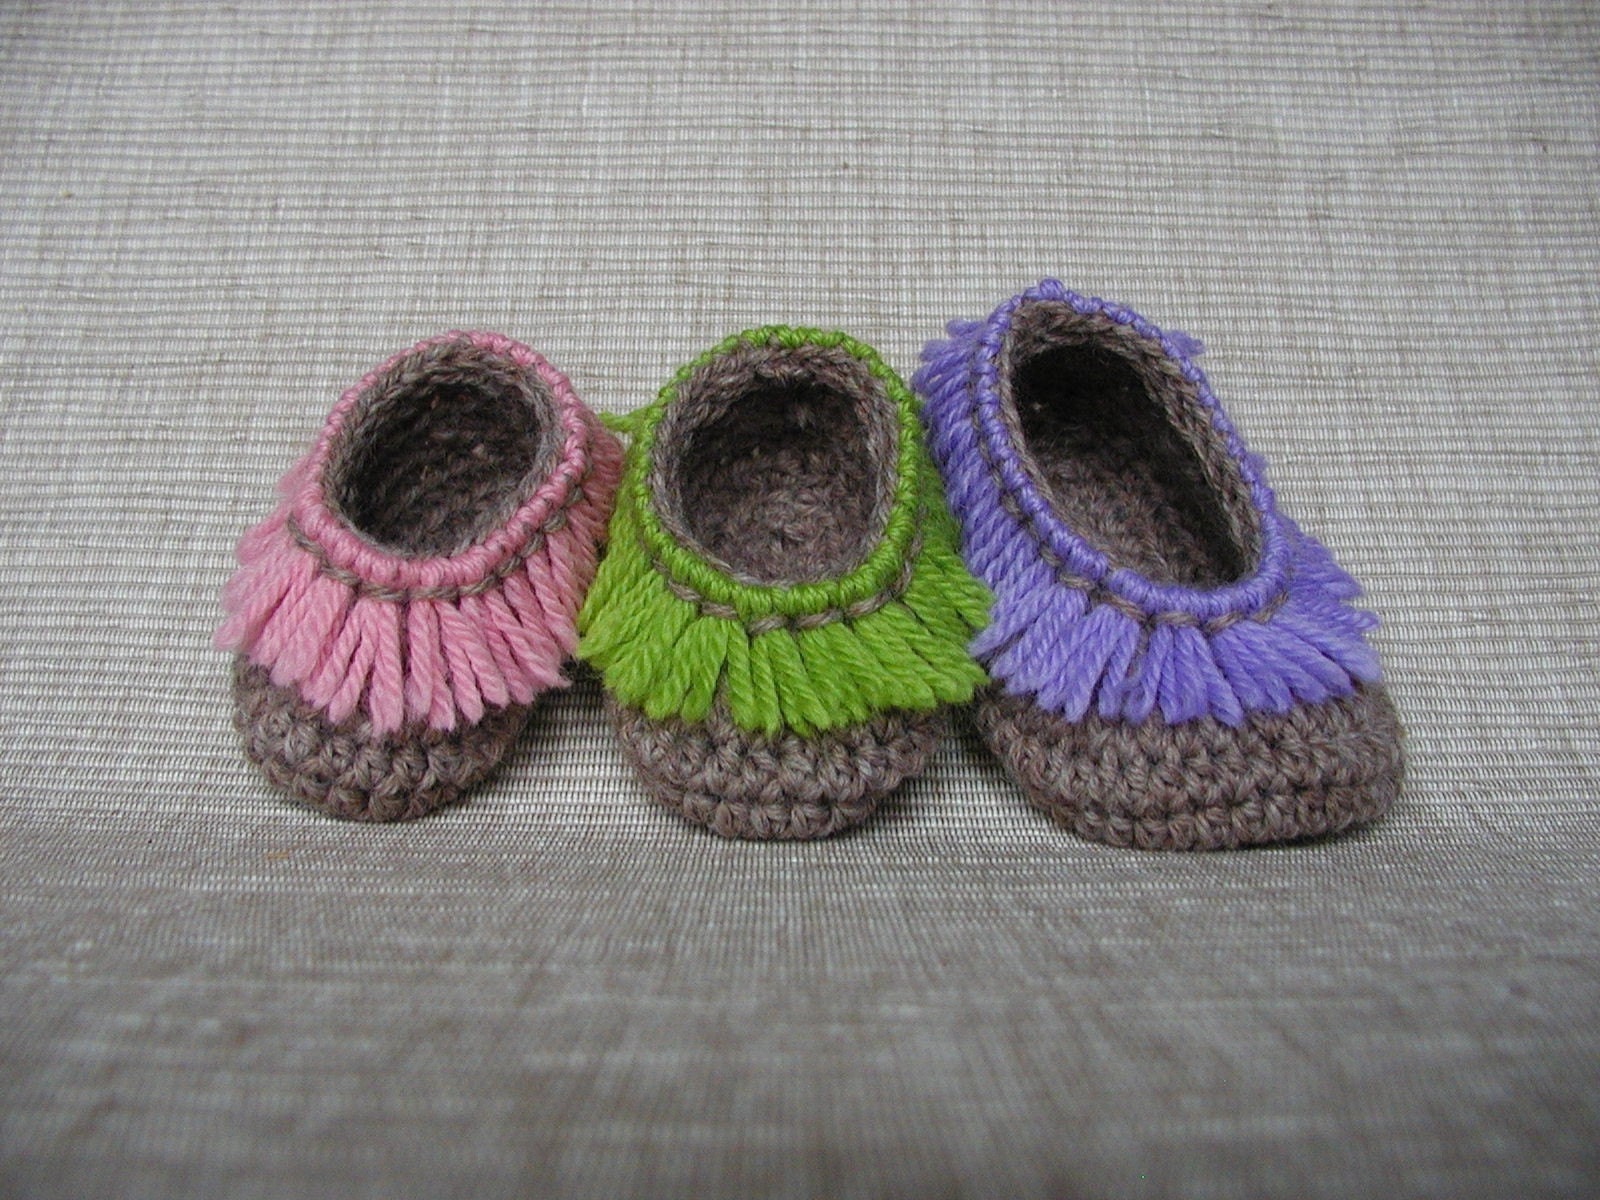 Re: baby crochet shoes free pattern on Sat Apr 13, 2013 9:38 am